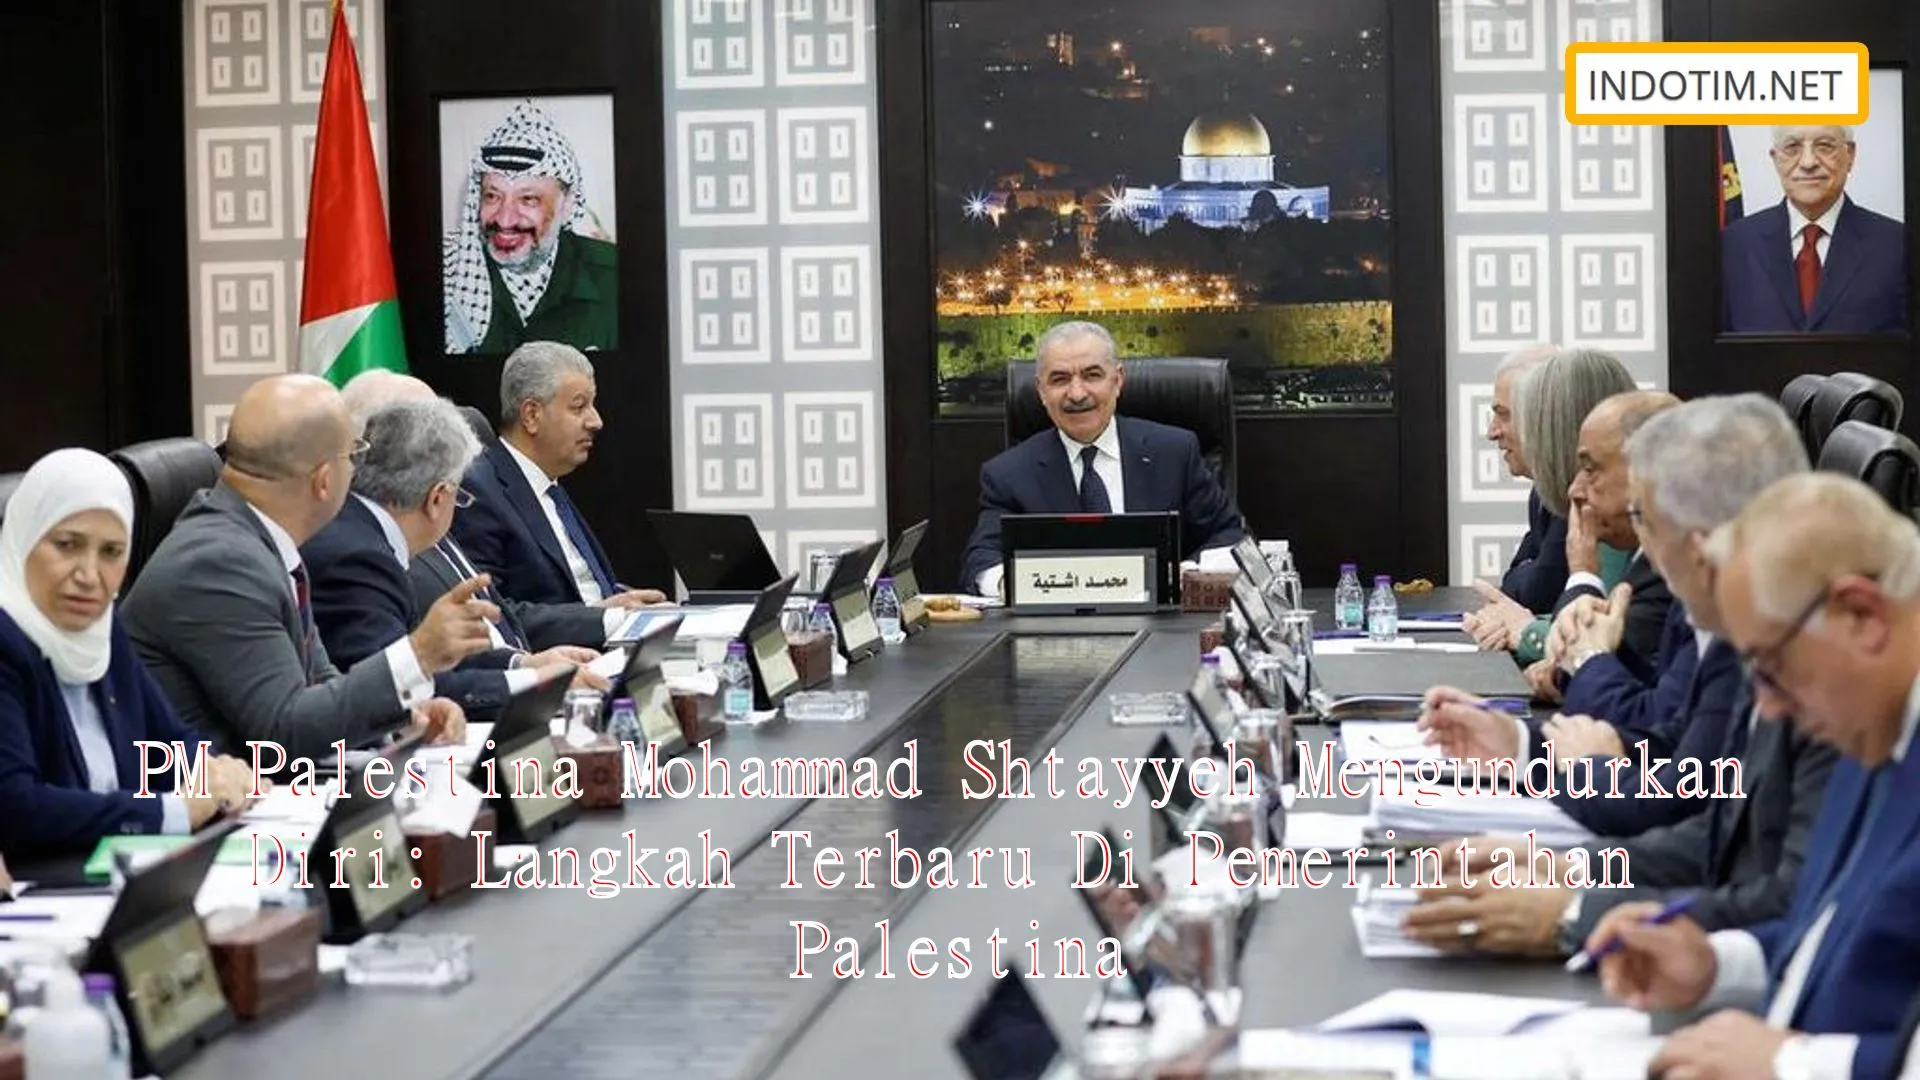 PM Palestina Mohammad Shtayyeh Mengundurkan Diri: Langkah Terbaru Di Pemerintahan Palestina